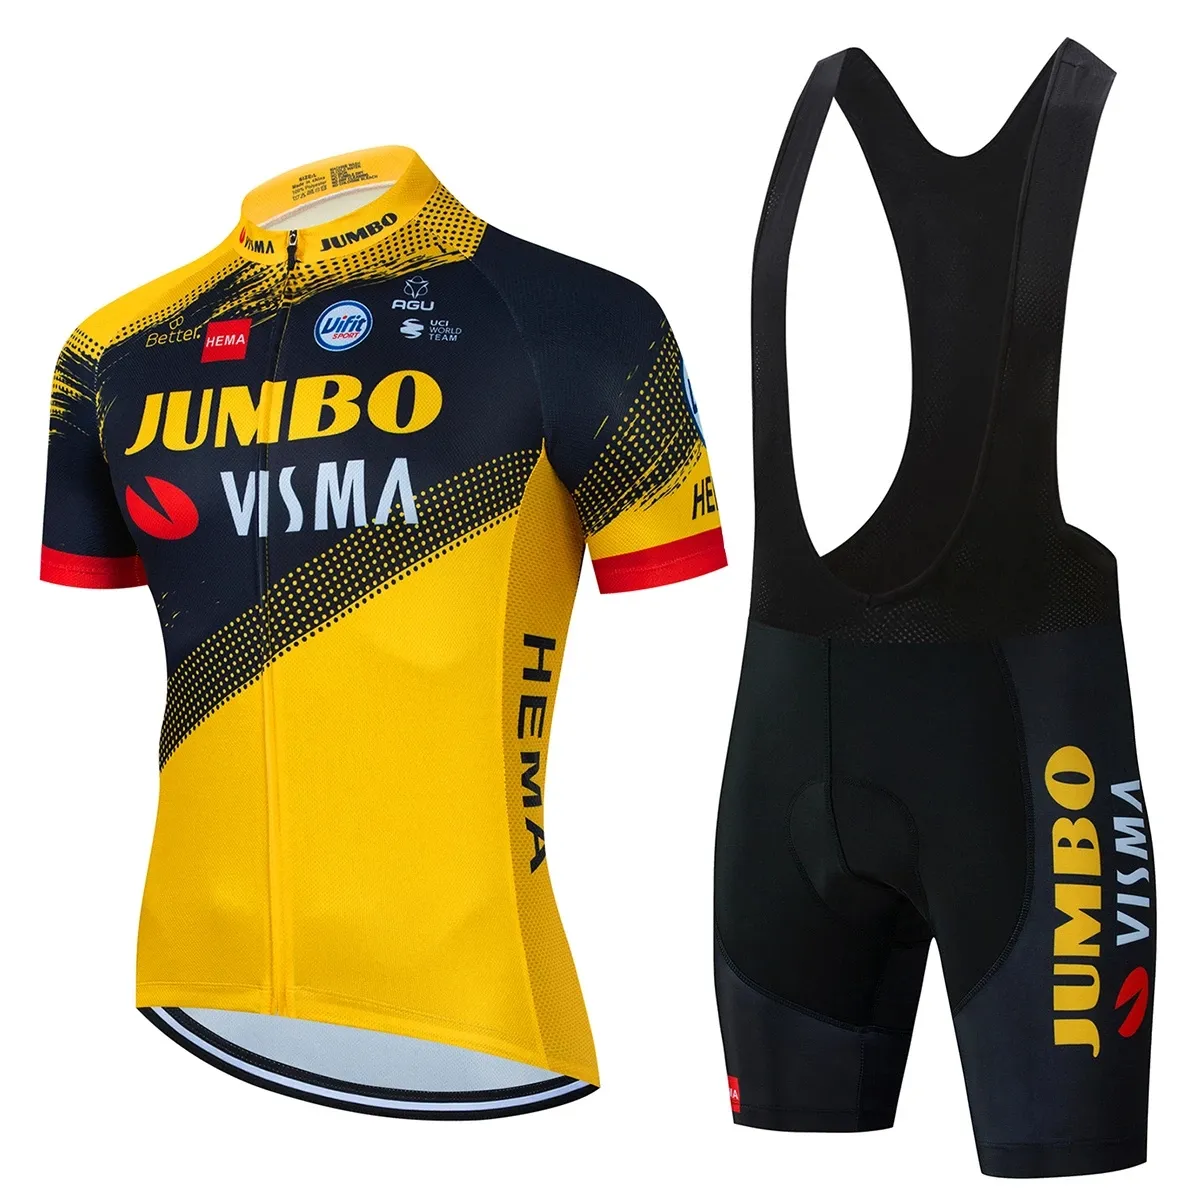 2022 Pro JUMBO VISMA Cycling Jersey Set Men's Cycling Clothing Road Bike Shirts Suit Bicycle Bib Shorts MTB Wear Maillot Culotte